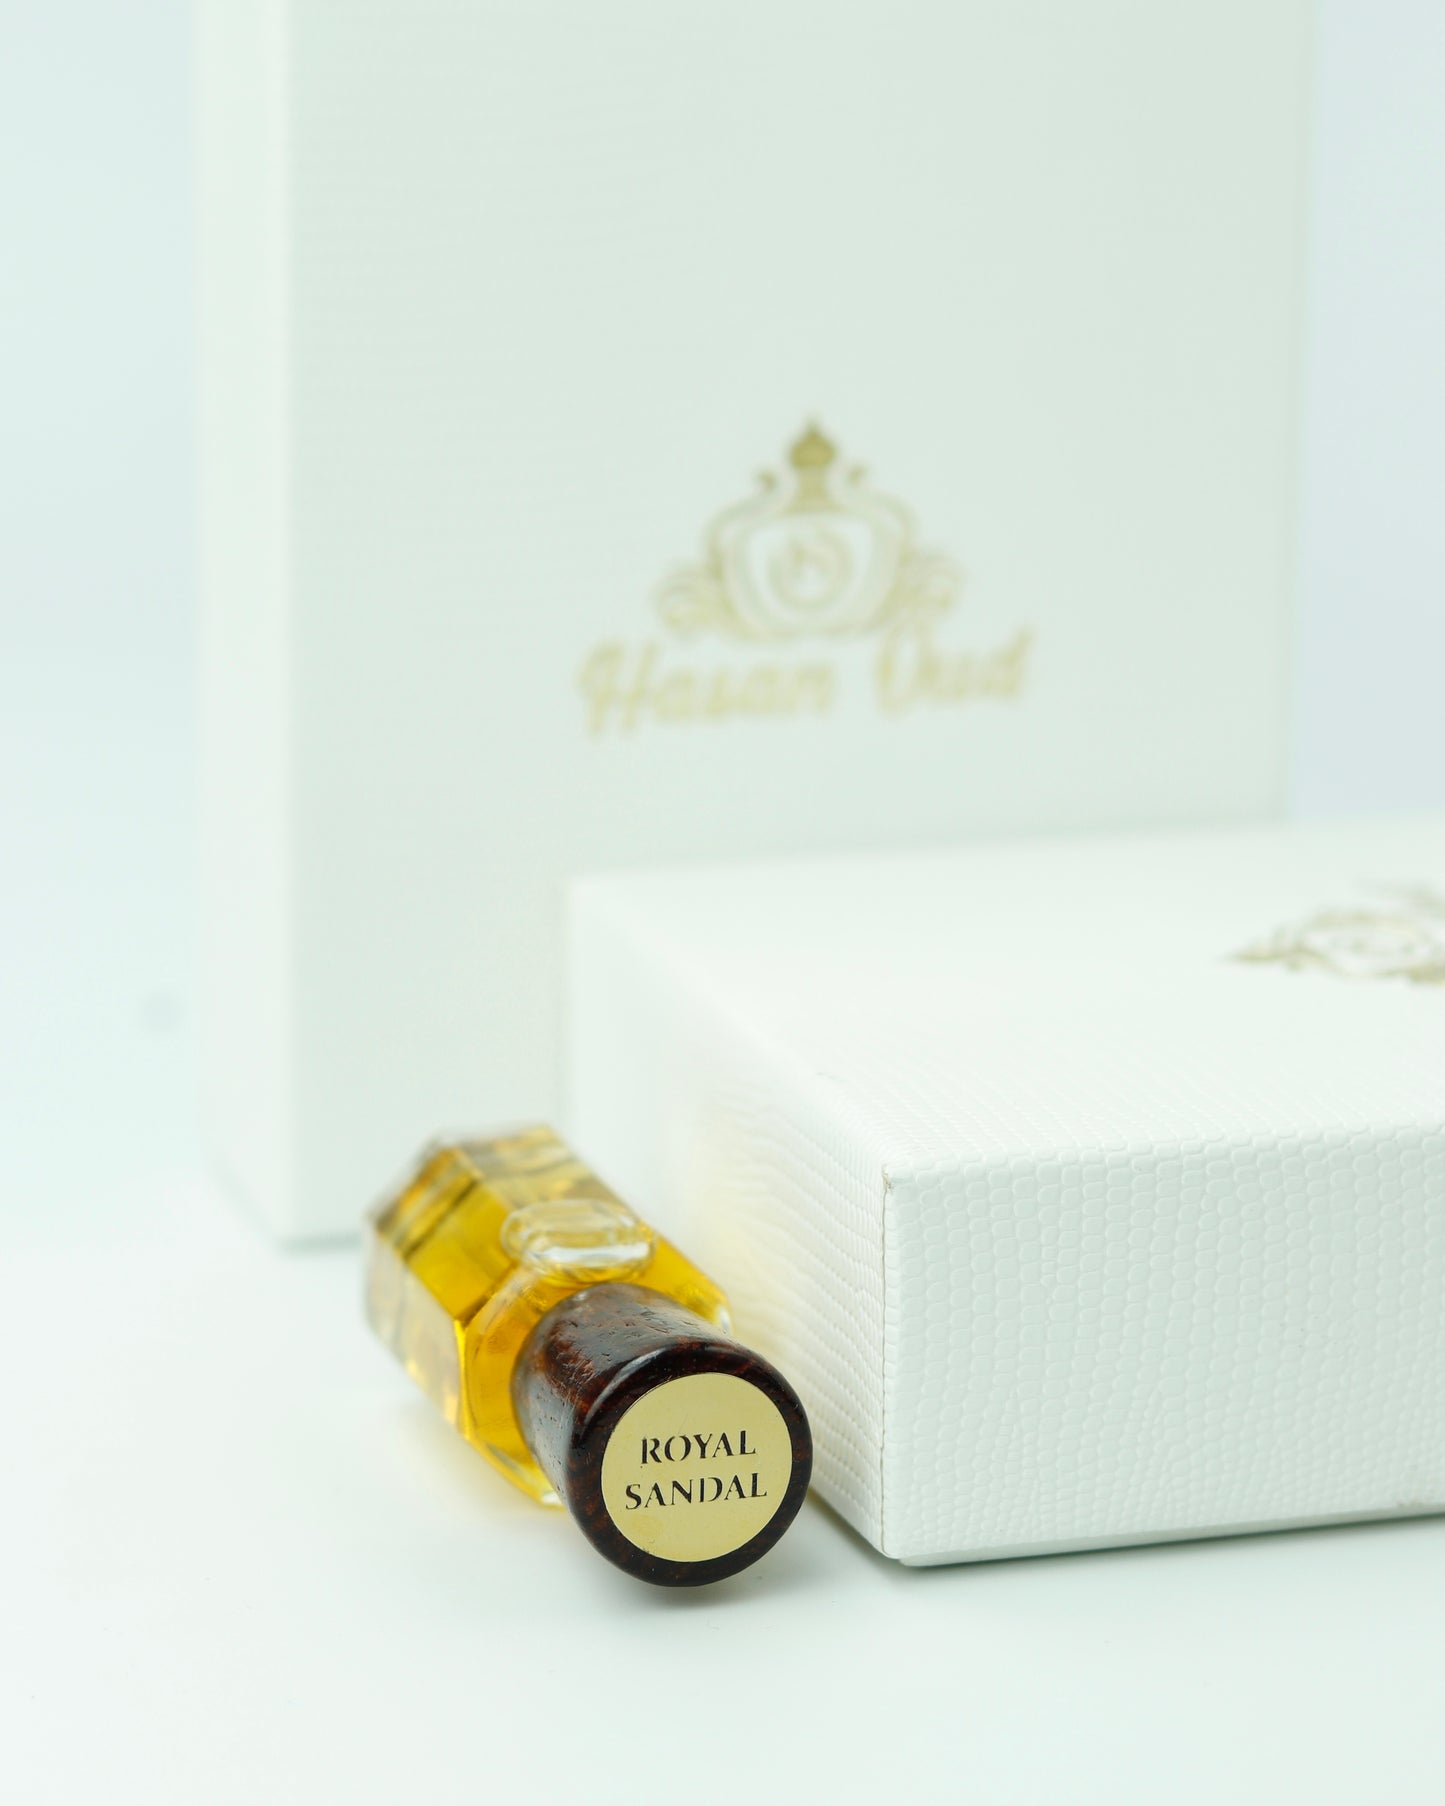 Royal sandal Premium Fragrances Alcohol Free By Hasan Oud